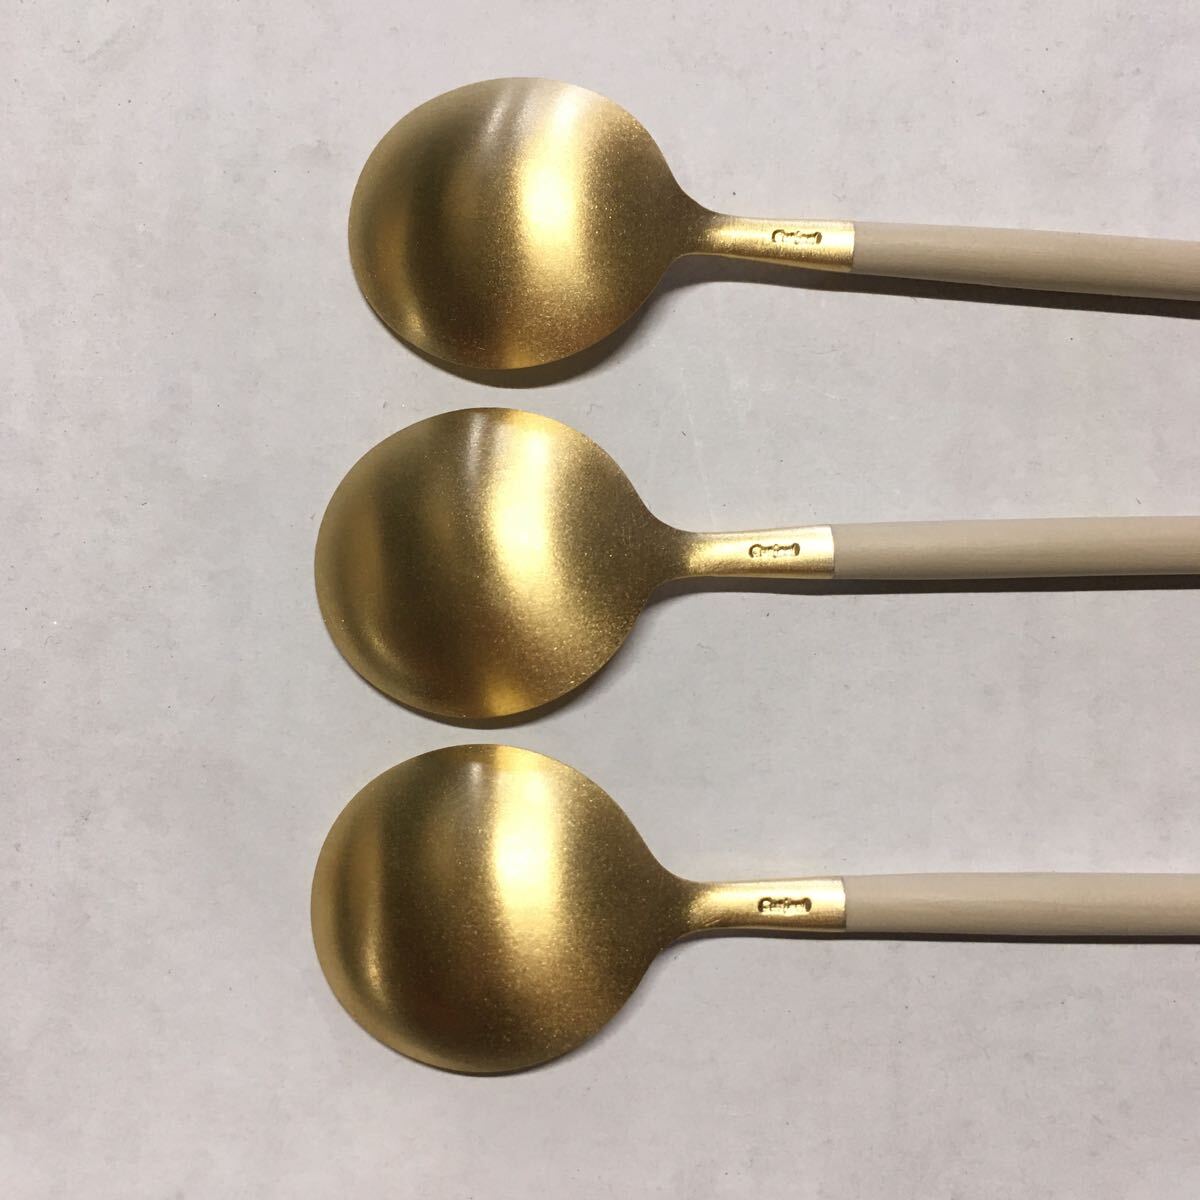 RX470 Cutipolkchi paul (pole) cutlery set goa ivory Gold spoon 7 point summarize kitchen interior unused storage goods tableware 